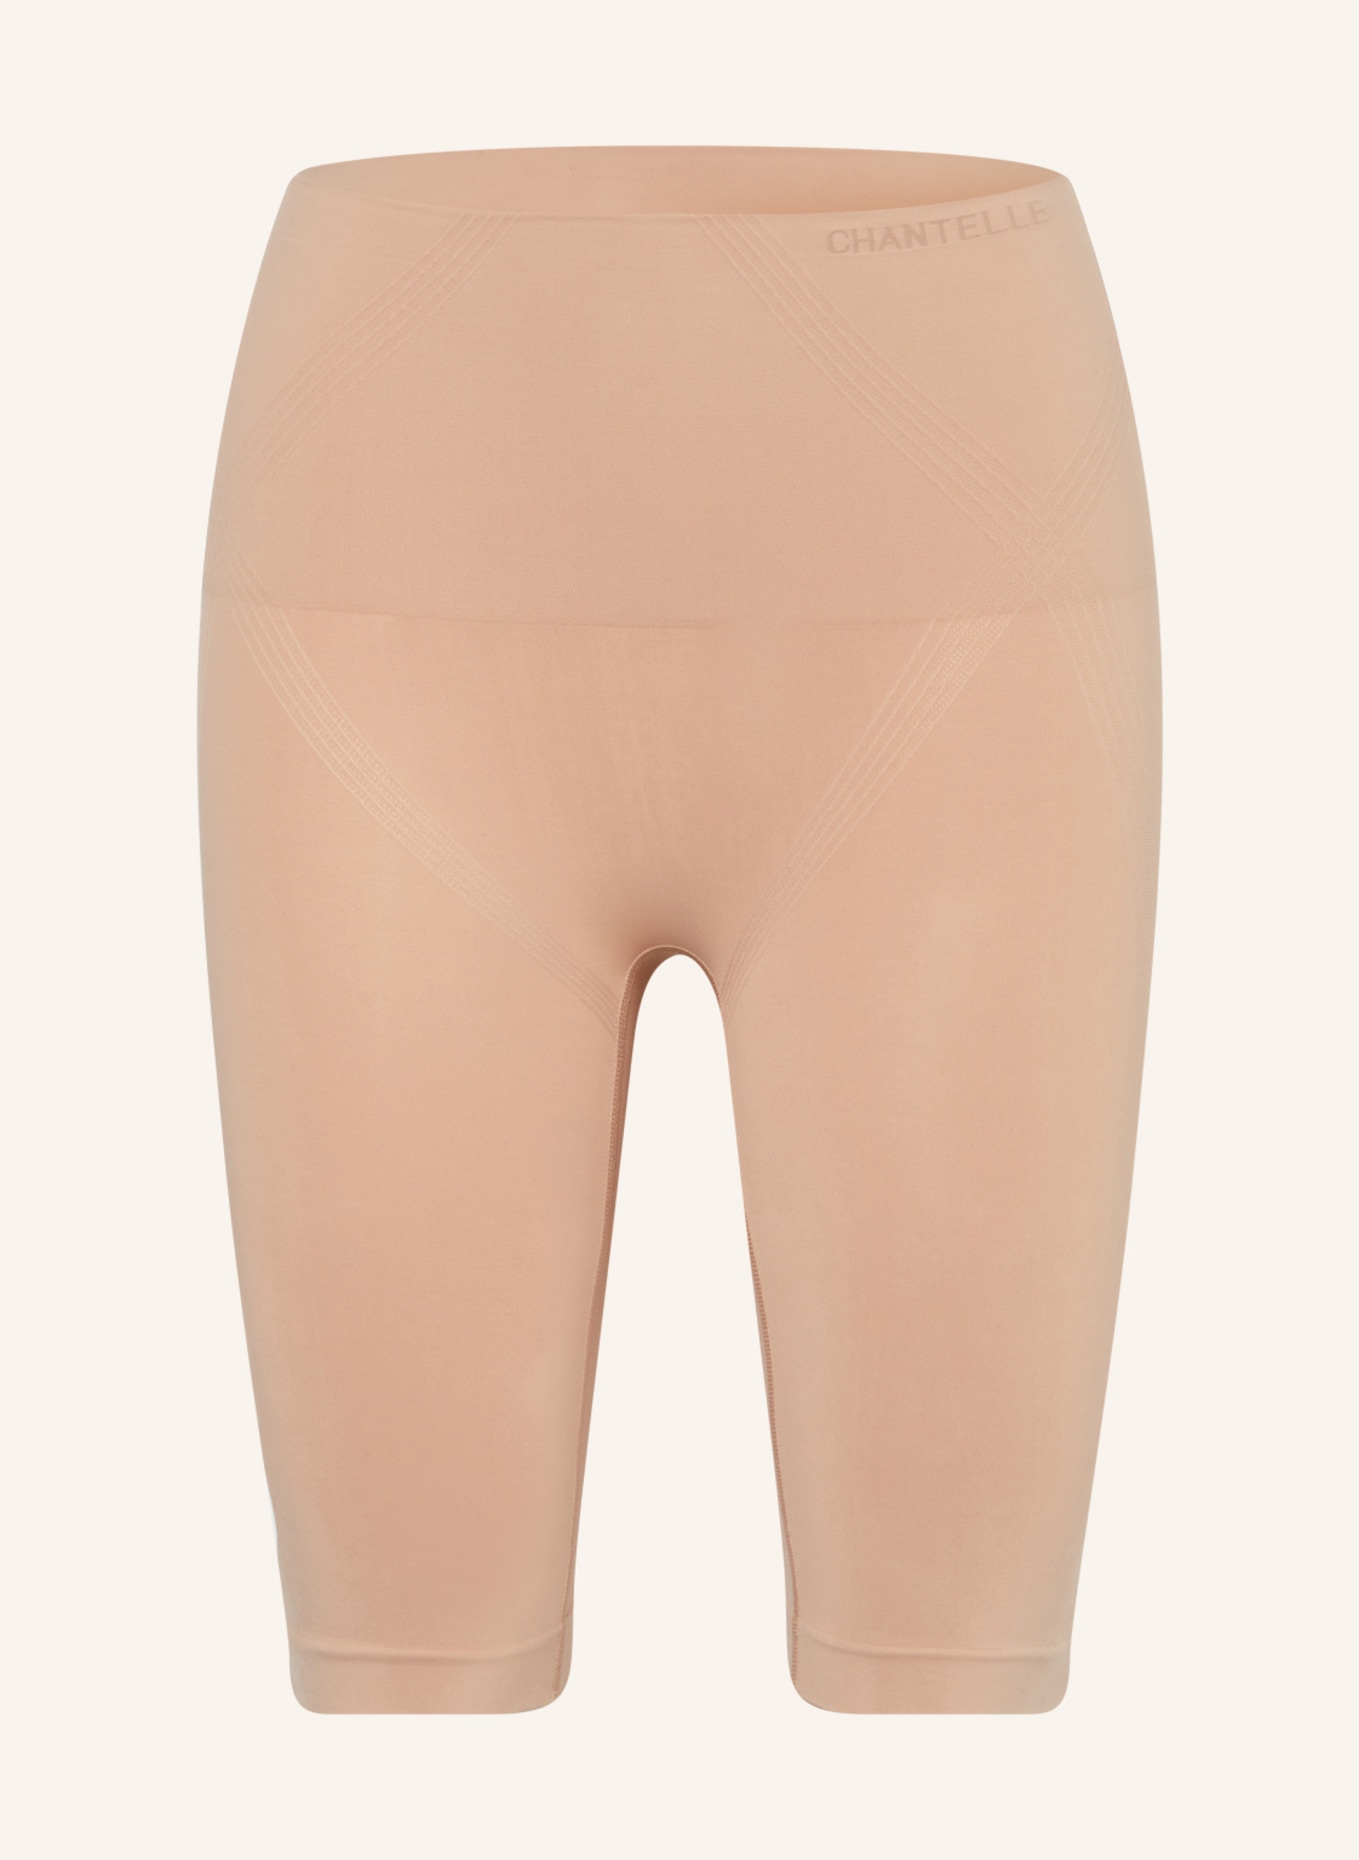 CHANTELLE Shape-Shorts SMOOTH COMFORT, Farbe: NUDE (Bild 1)